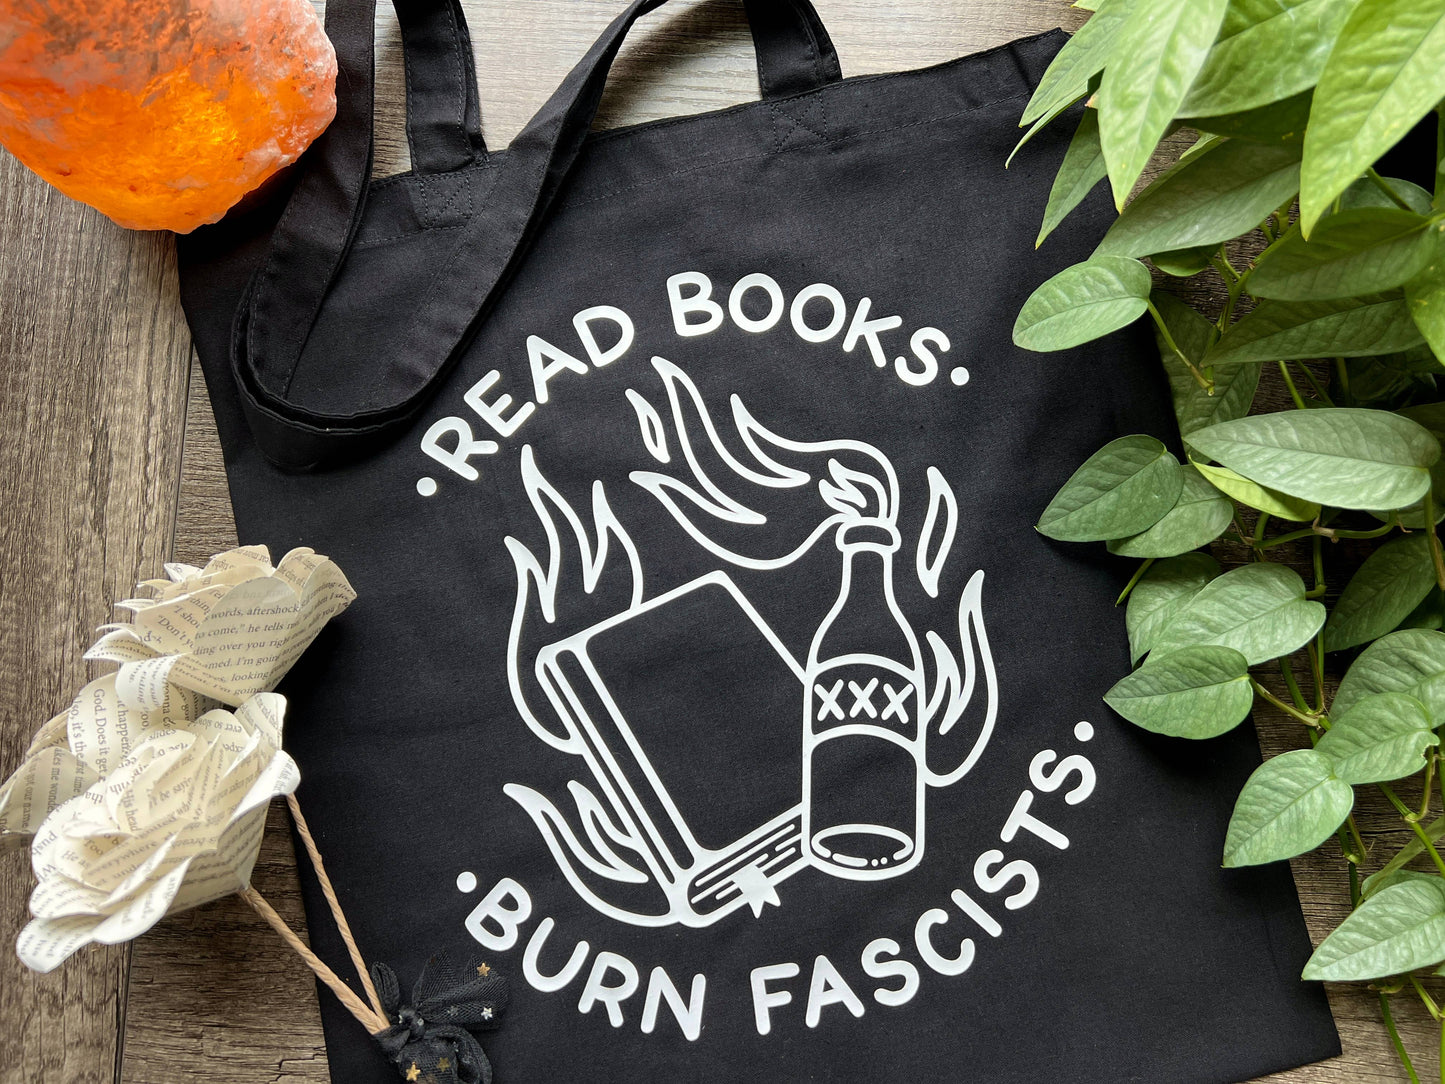 Read Books Burn Fascists Cotton Tote